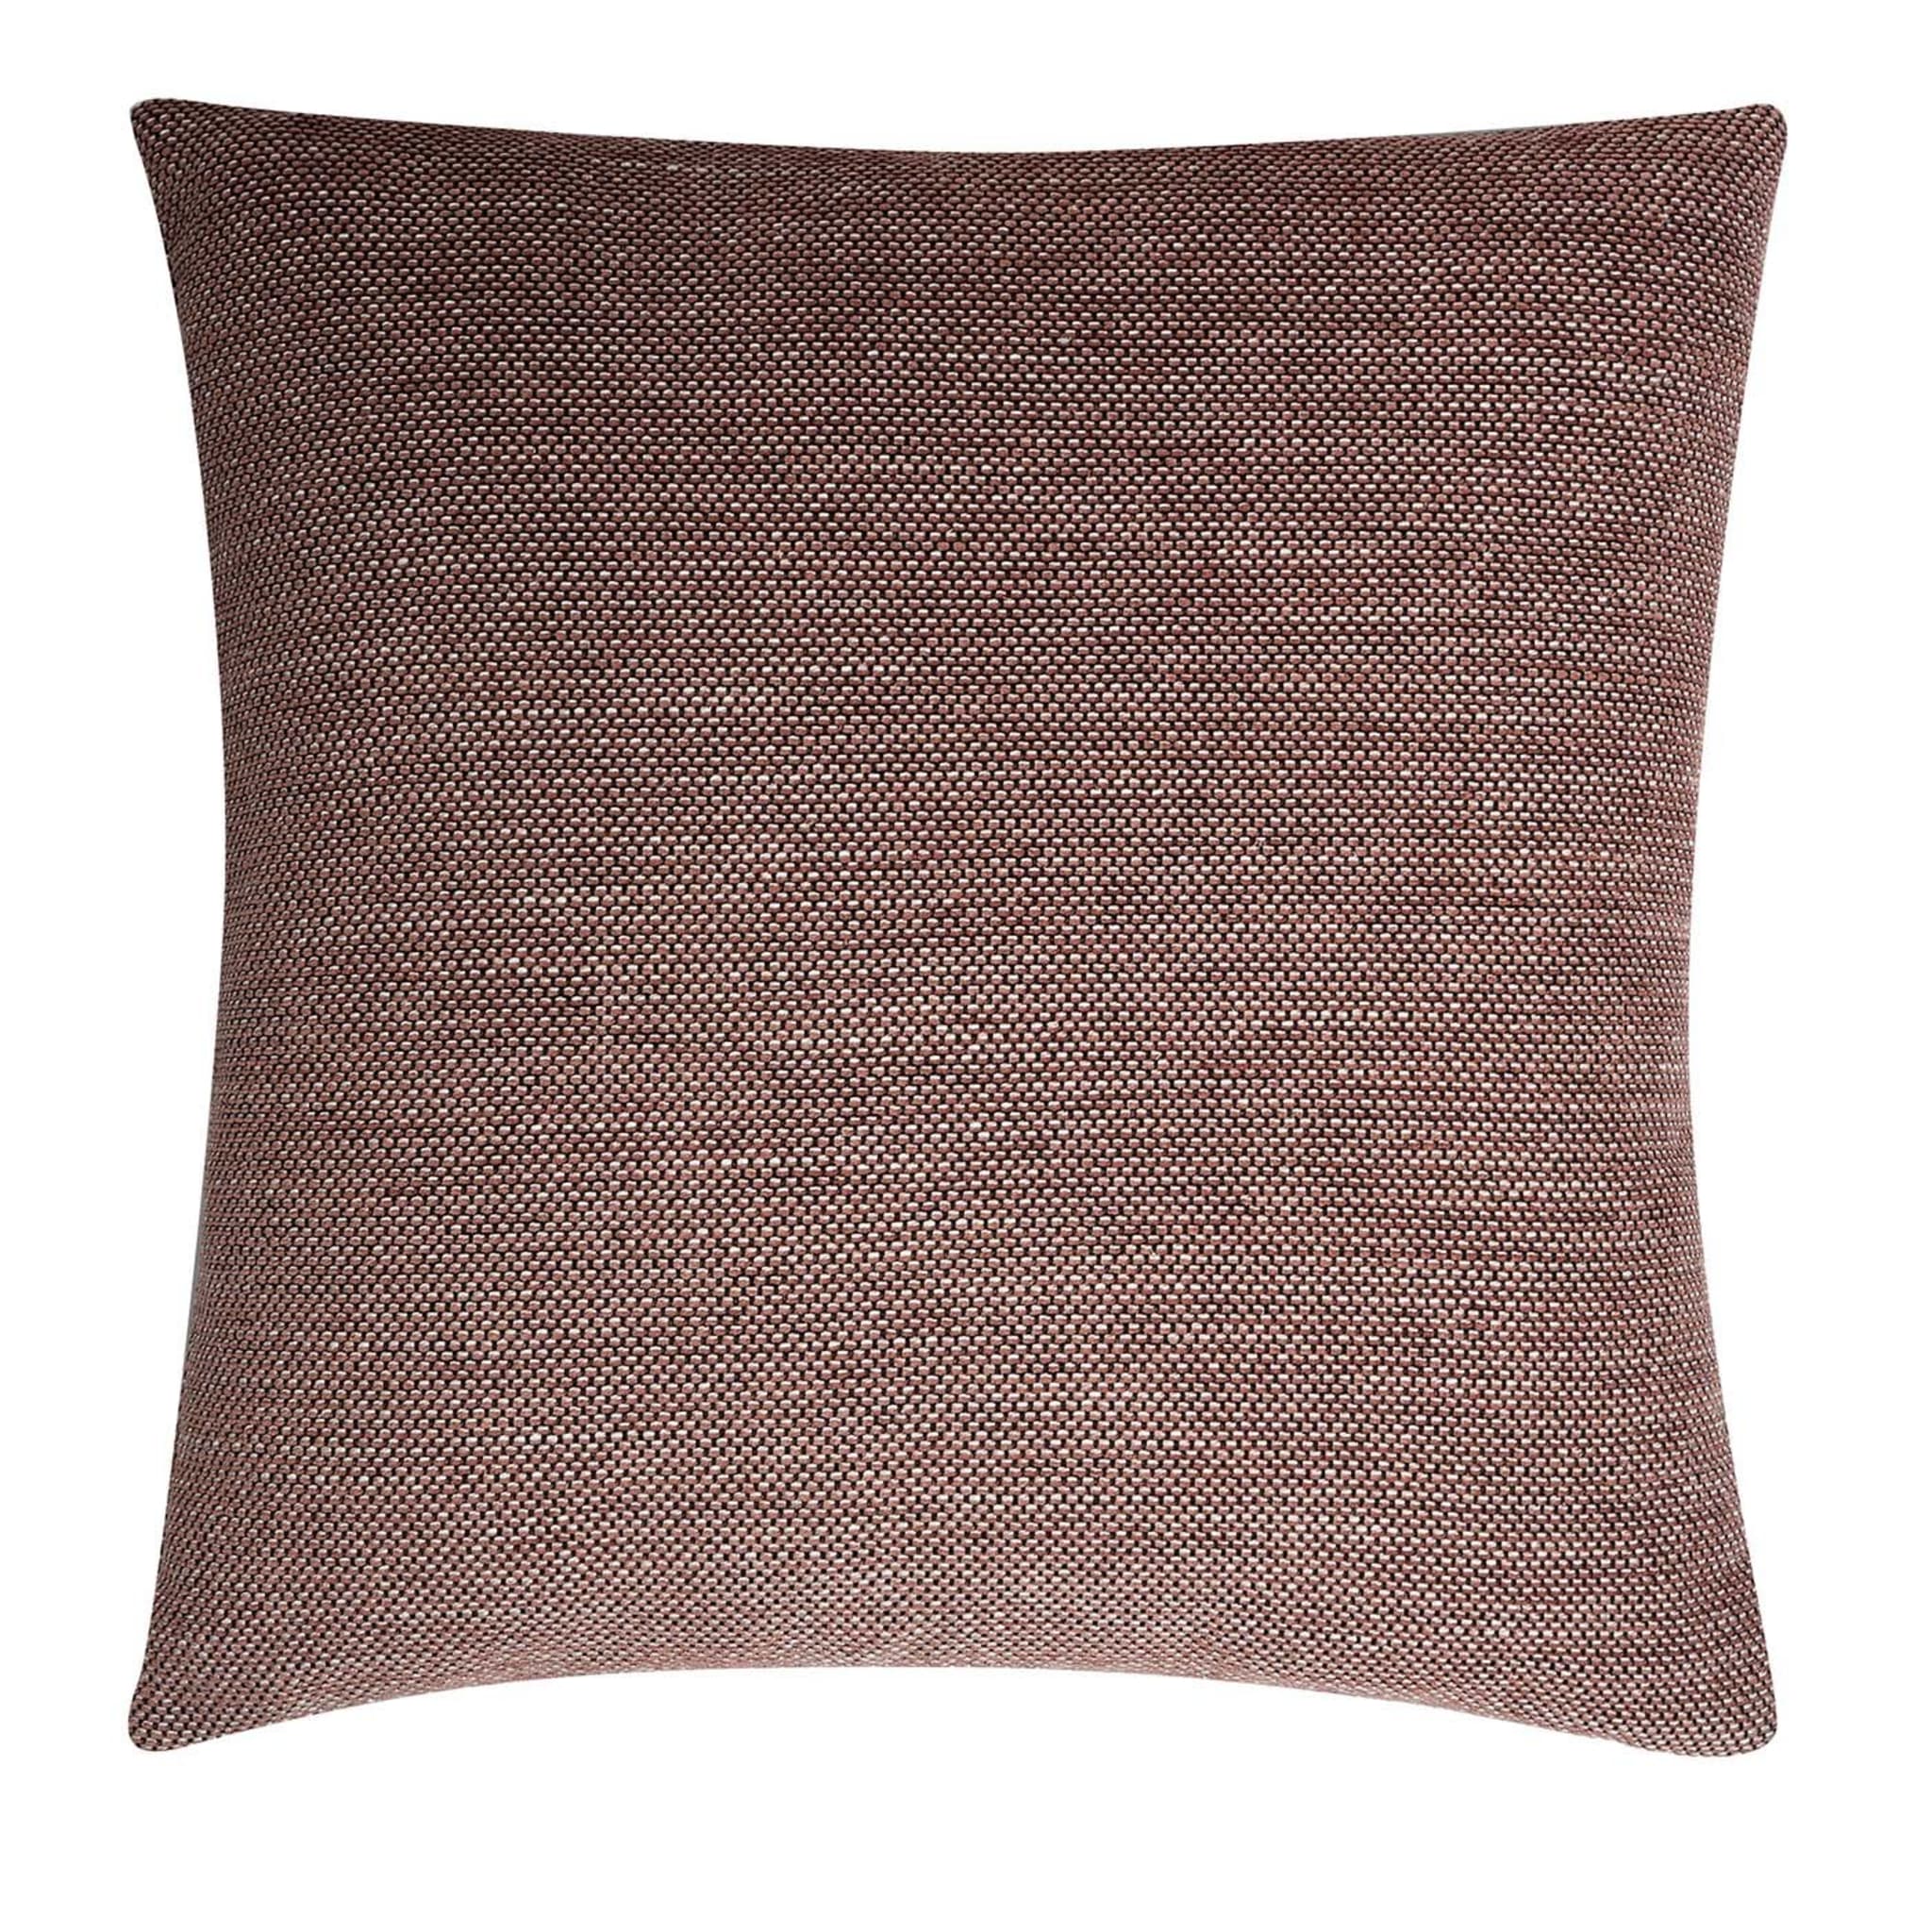 Cuscino in lana color malva - Vista principale